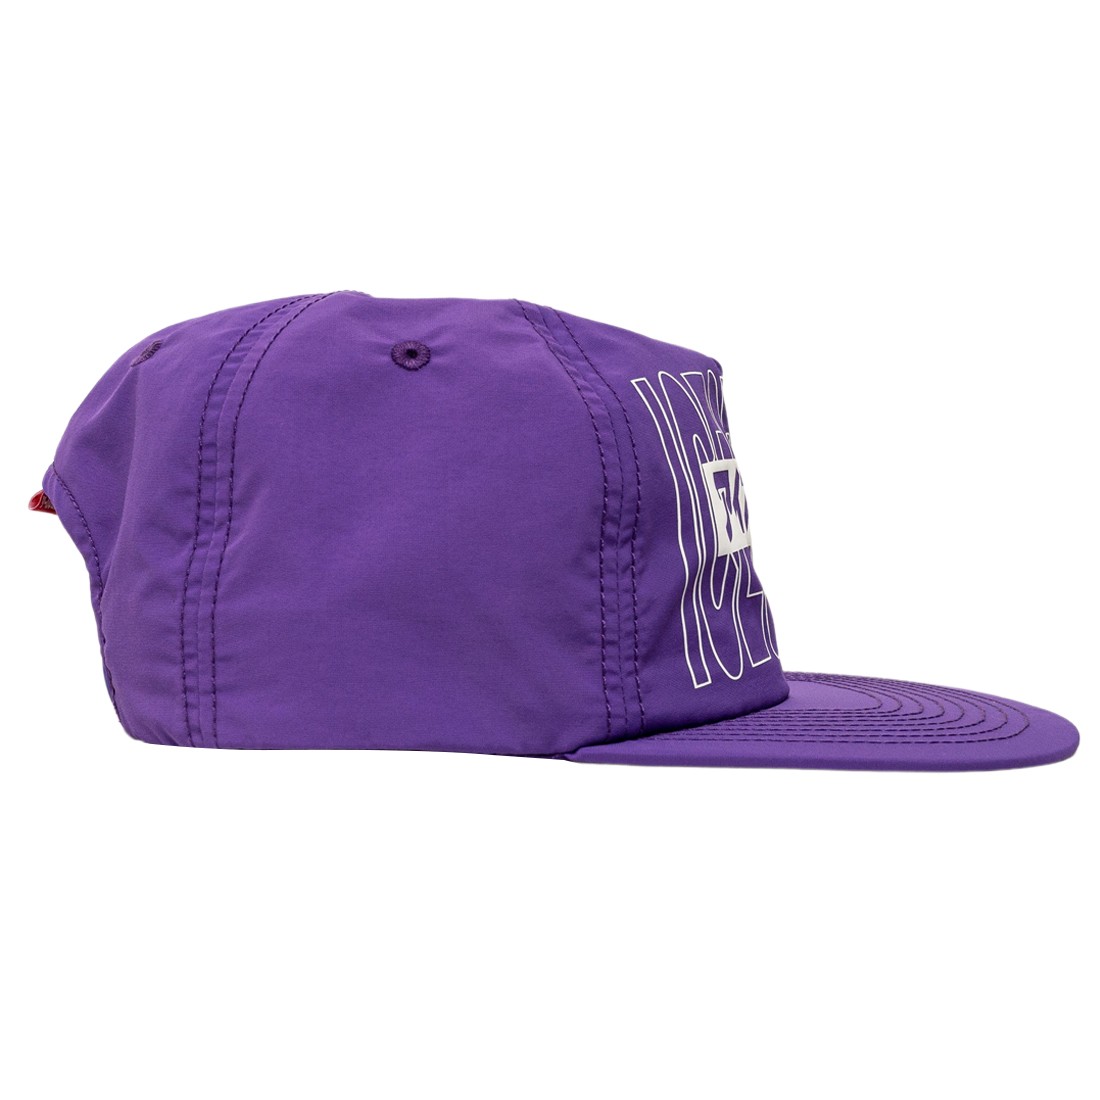 x NOAH Camo Sports Hat